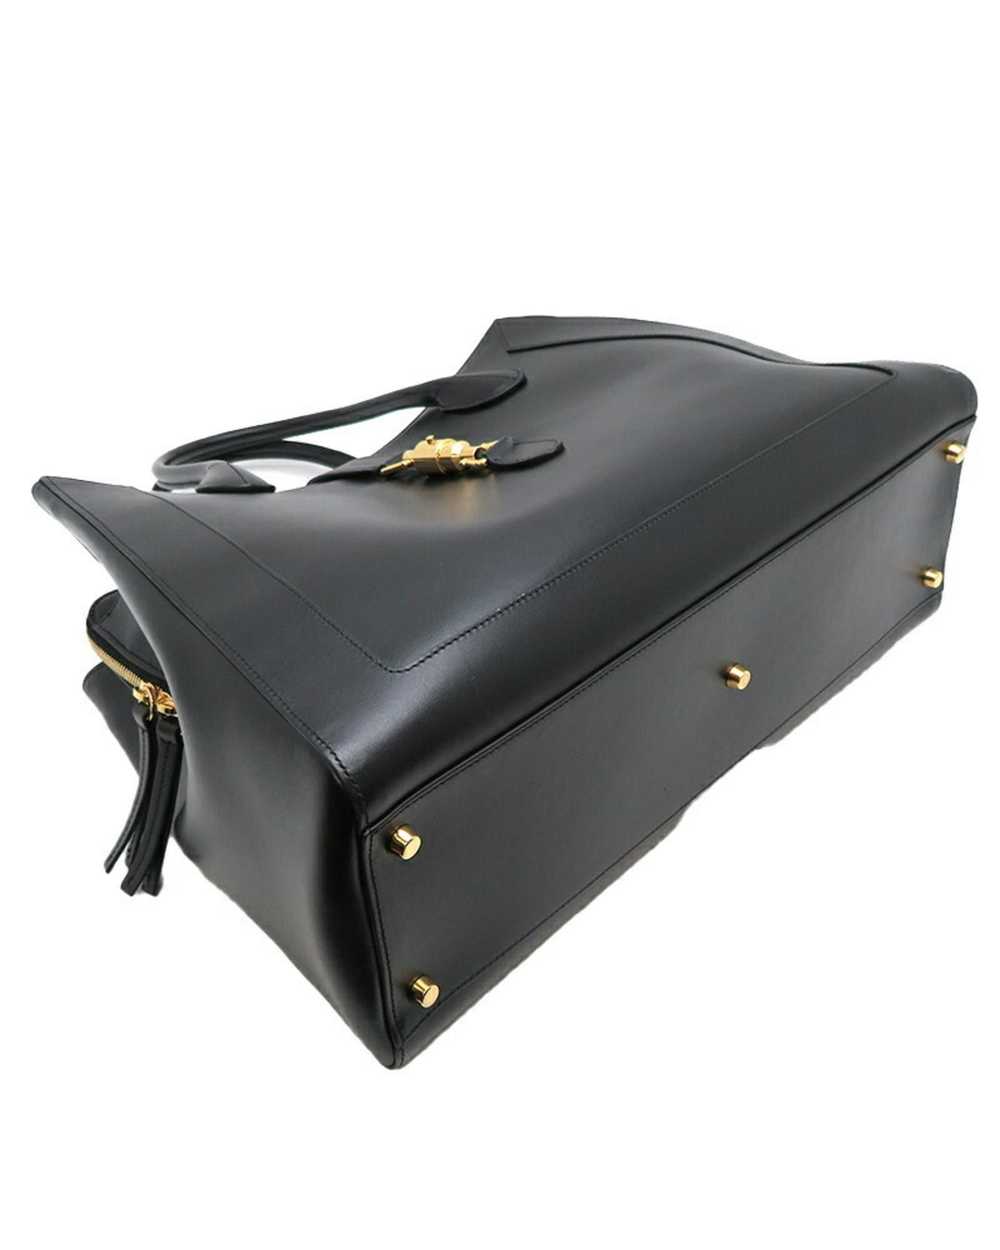 Gucci Timeless Black Leather Handbag - image 3